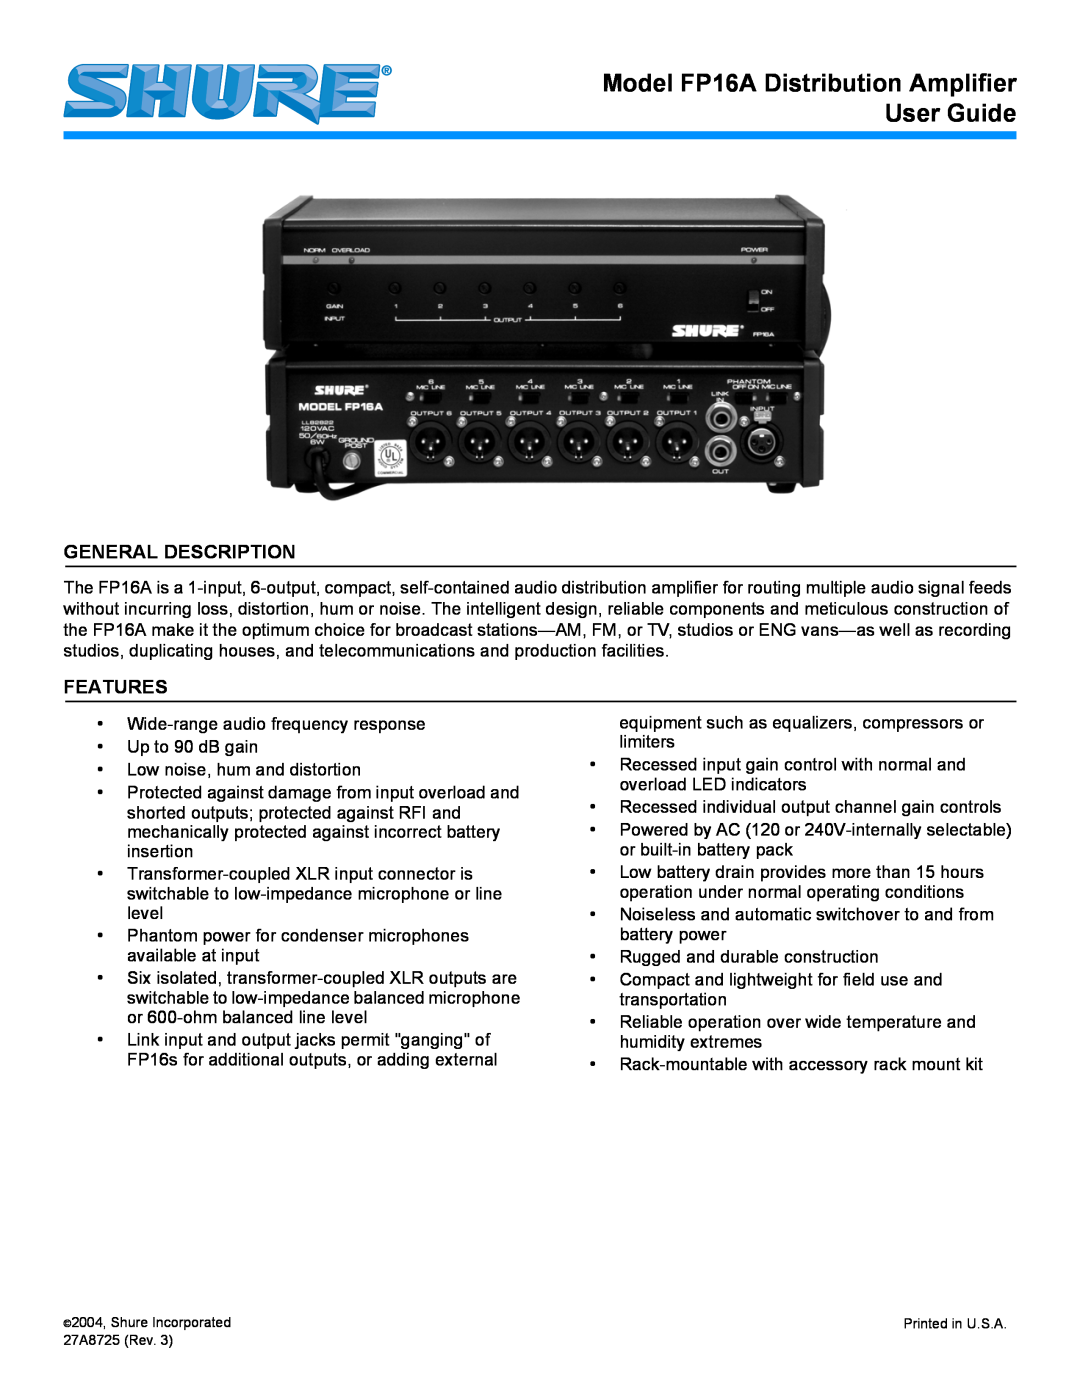 Shure manual General Description, Features, Model FP16A Distribution Amplifier User Guide 